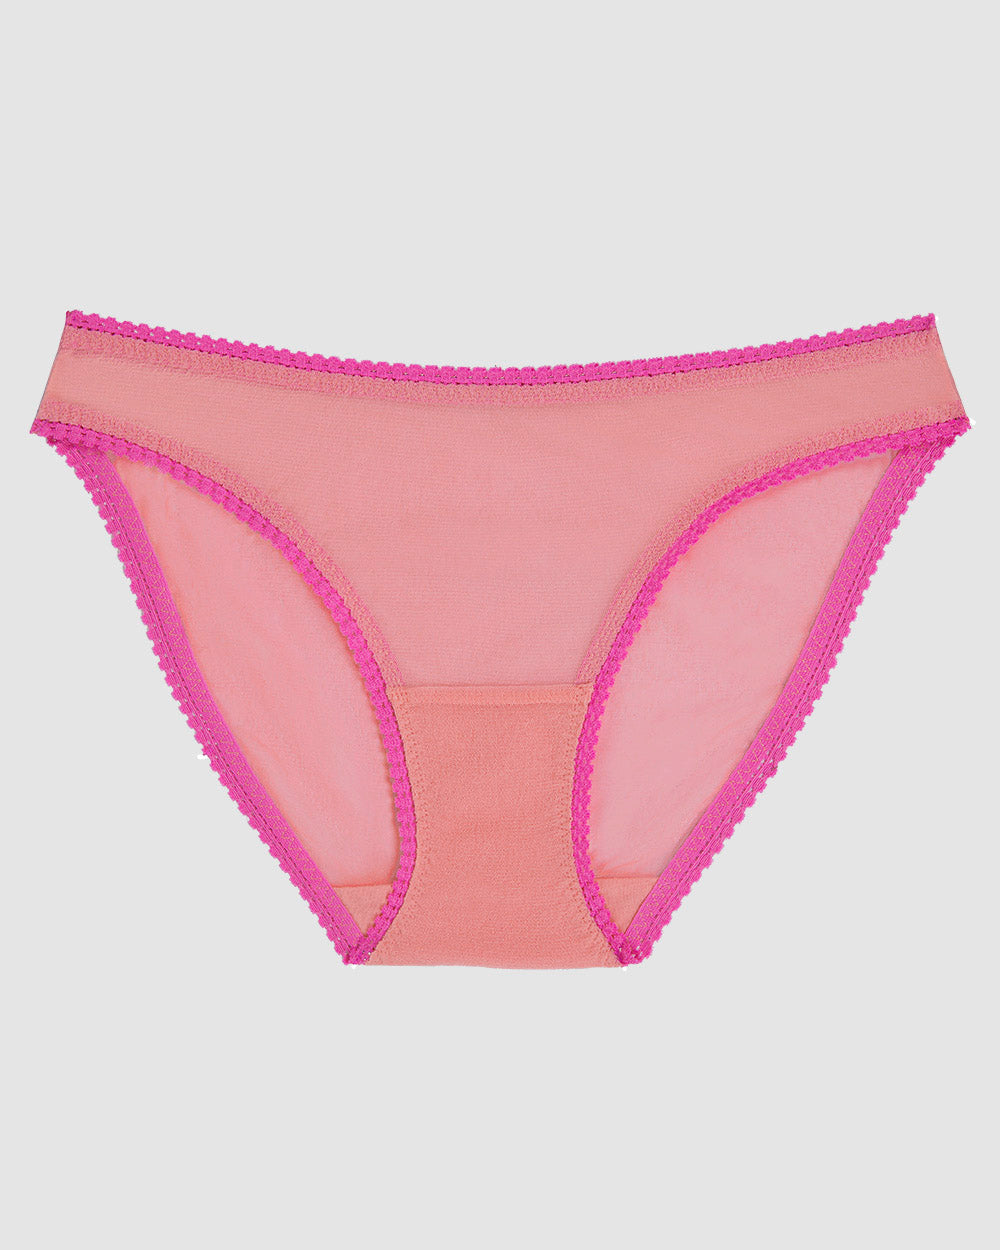 A sunset rose Gossamer Mesh Hip Bikini Underwear